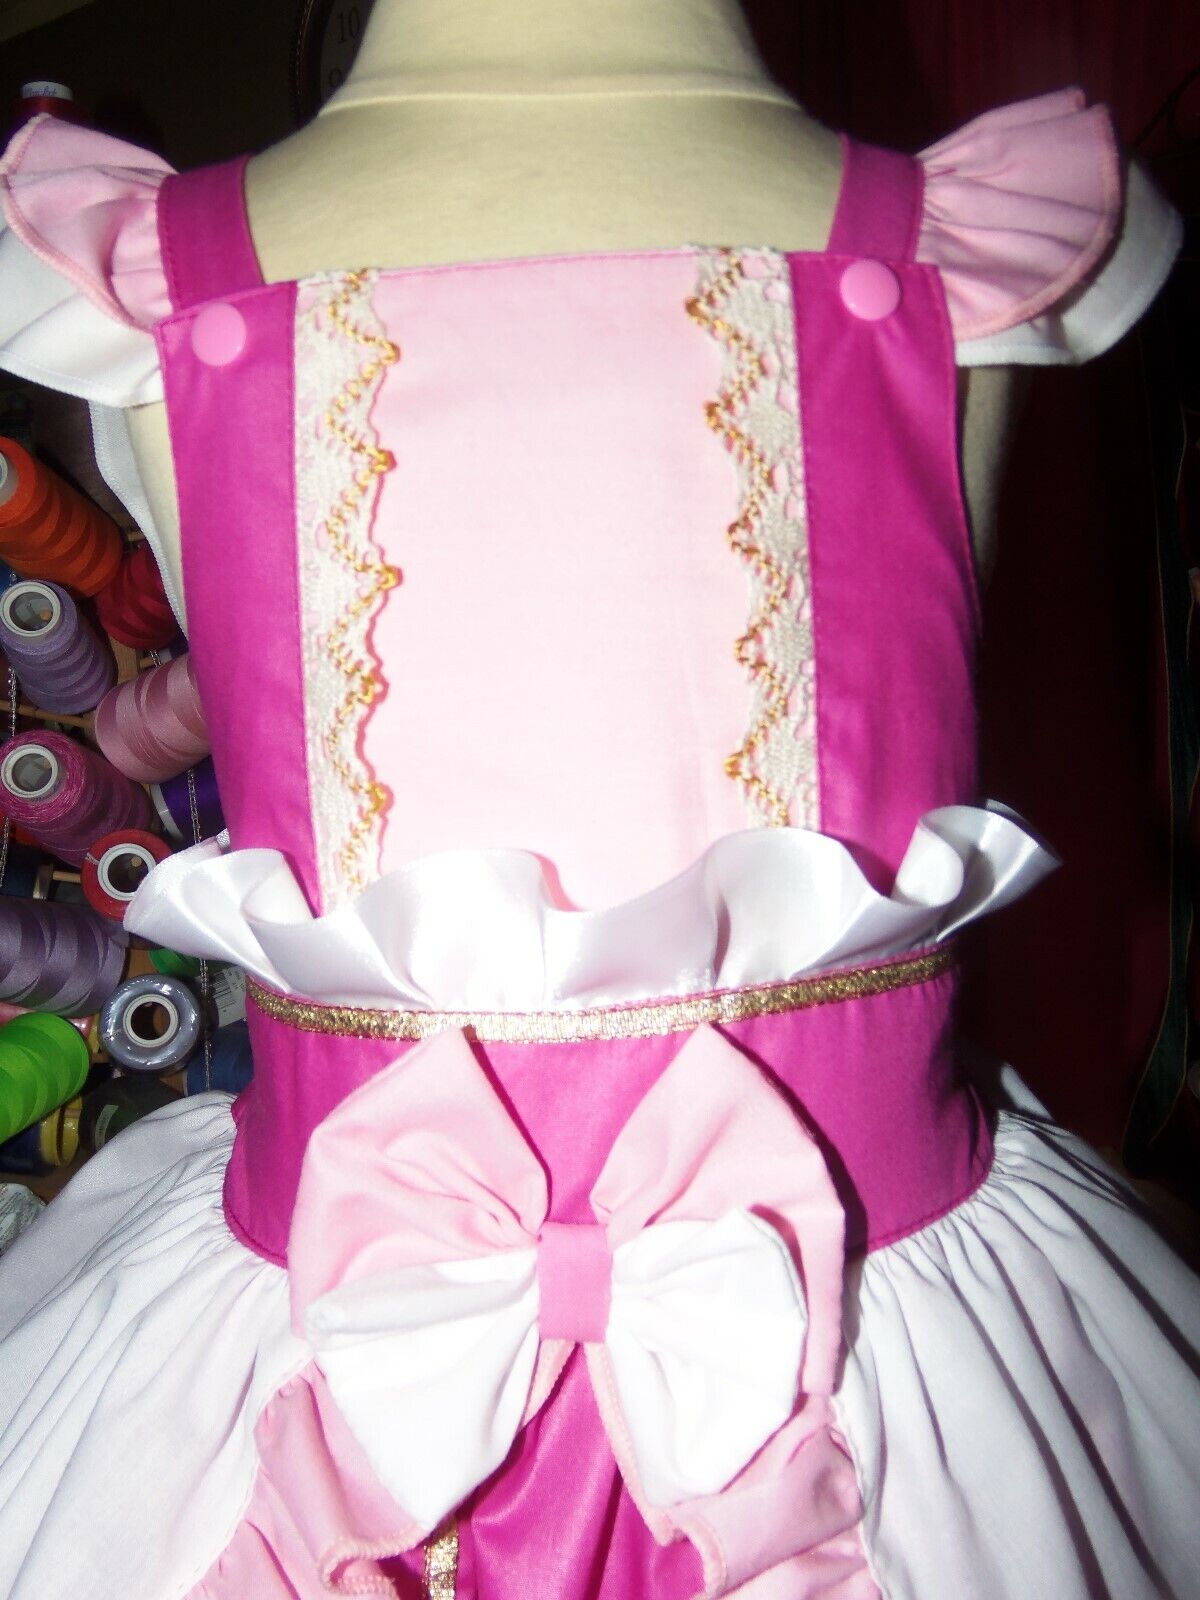 Princess Aurora Disney Sleeping Beauty Lace Pearls Bows  Dress   Size 4t Tania super specjalna cena